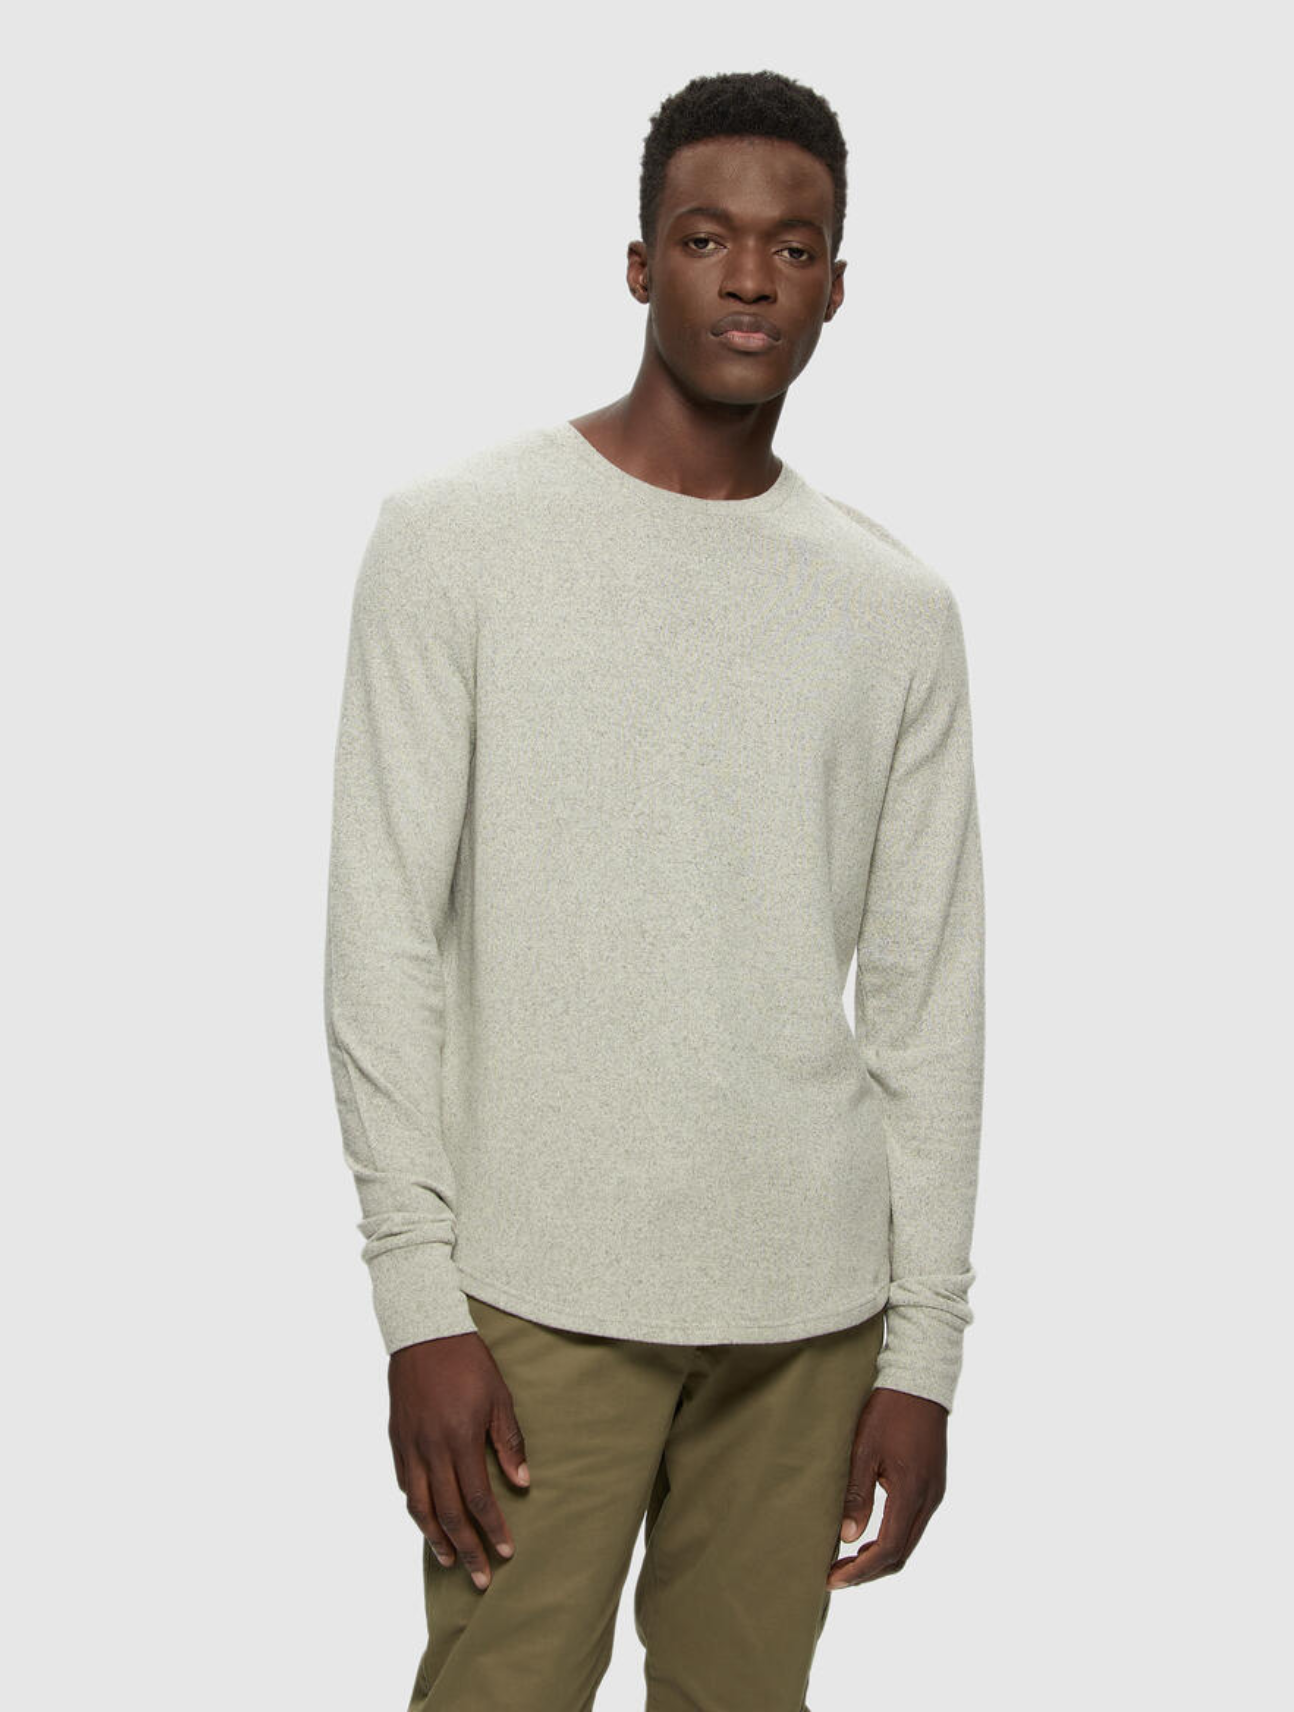 Uppercut Sweater